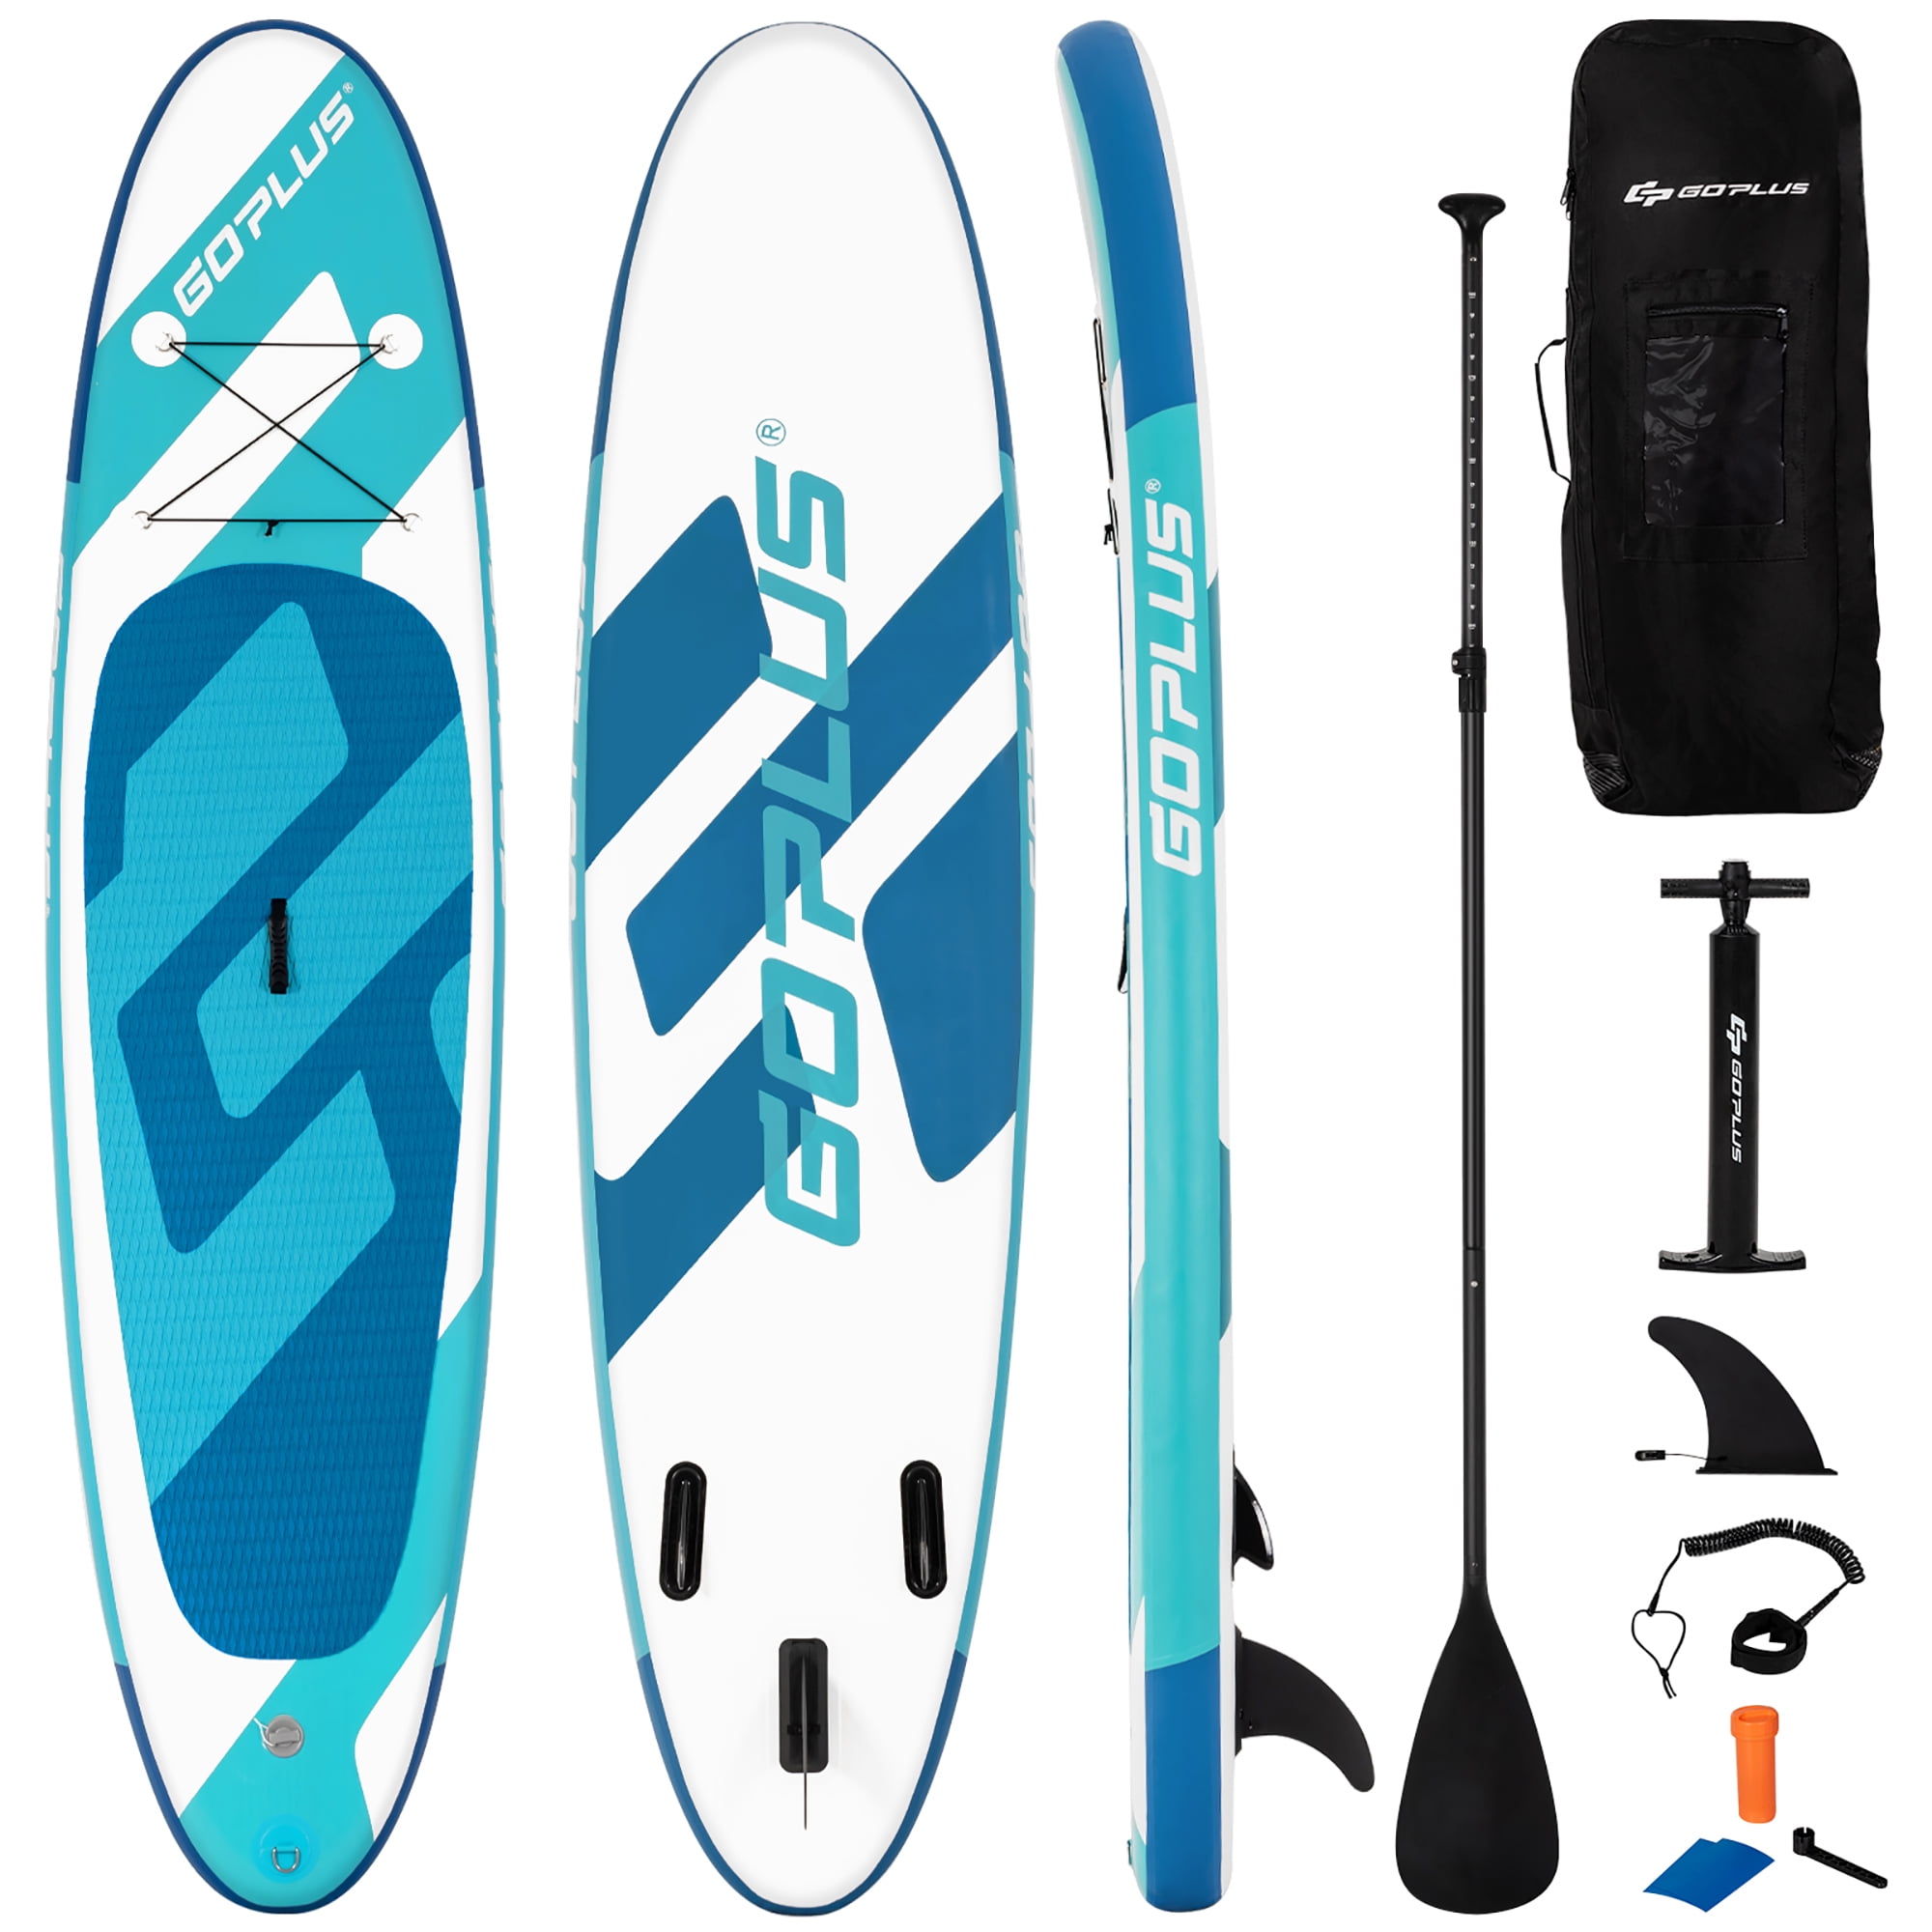 Water Sports Universal Washing Surf Wax Warm Cool Cold Skateboard Maintenance 